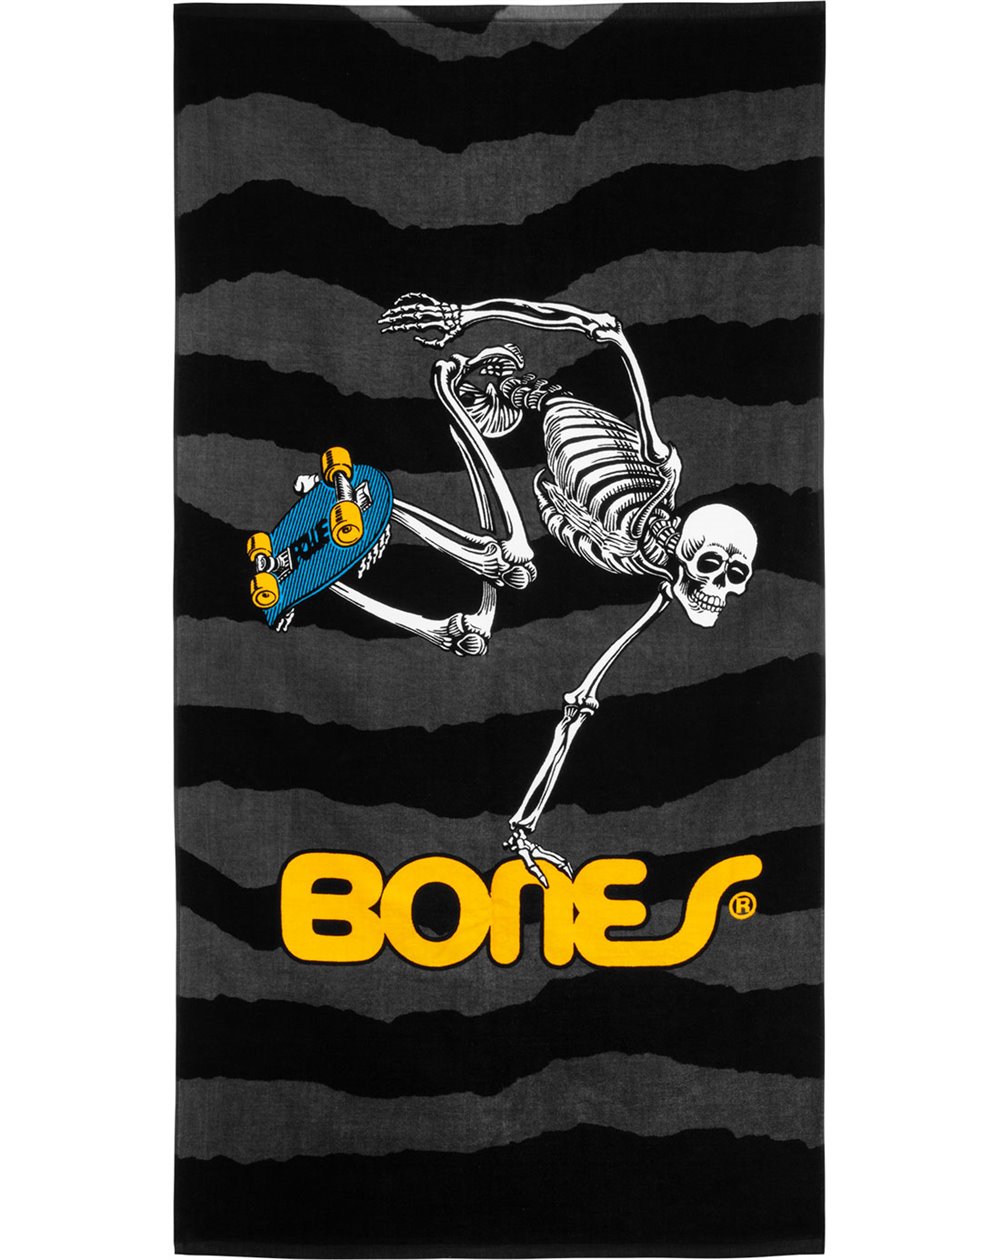 Powell Peralta Sk8board Skeleton Toalha de Praia